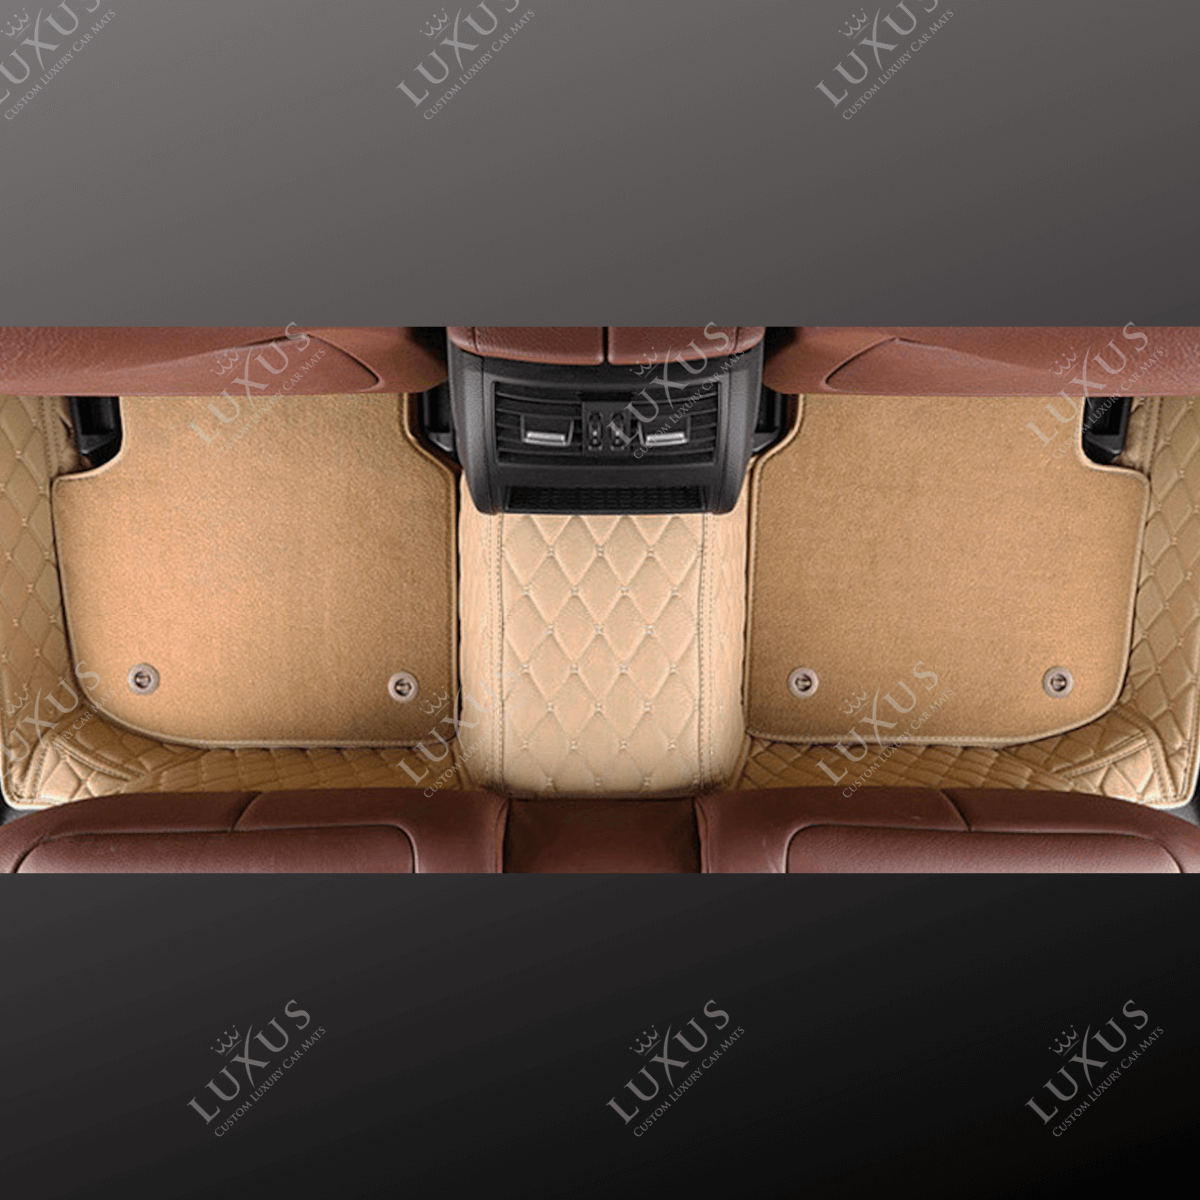 Cream Beige Base & Beige Top Carpet Double Layer Luxury Car Mats Set